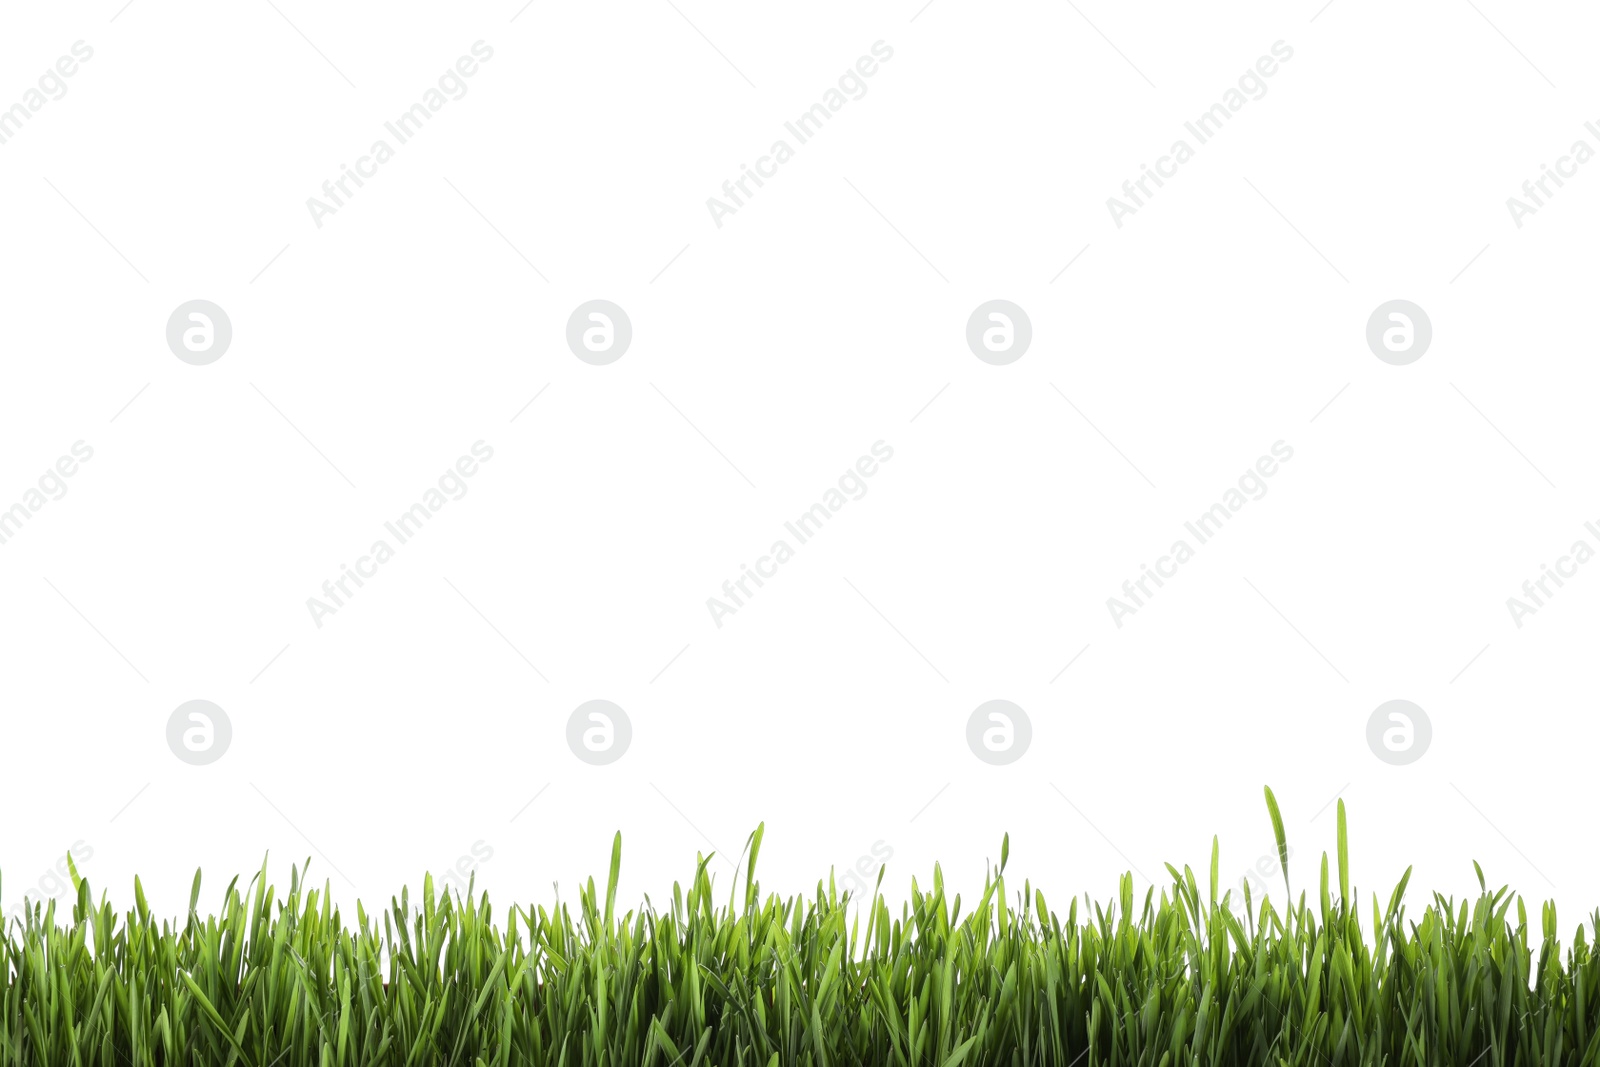 Photo of Fresh green grass isolated on white. Spring season